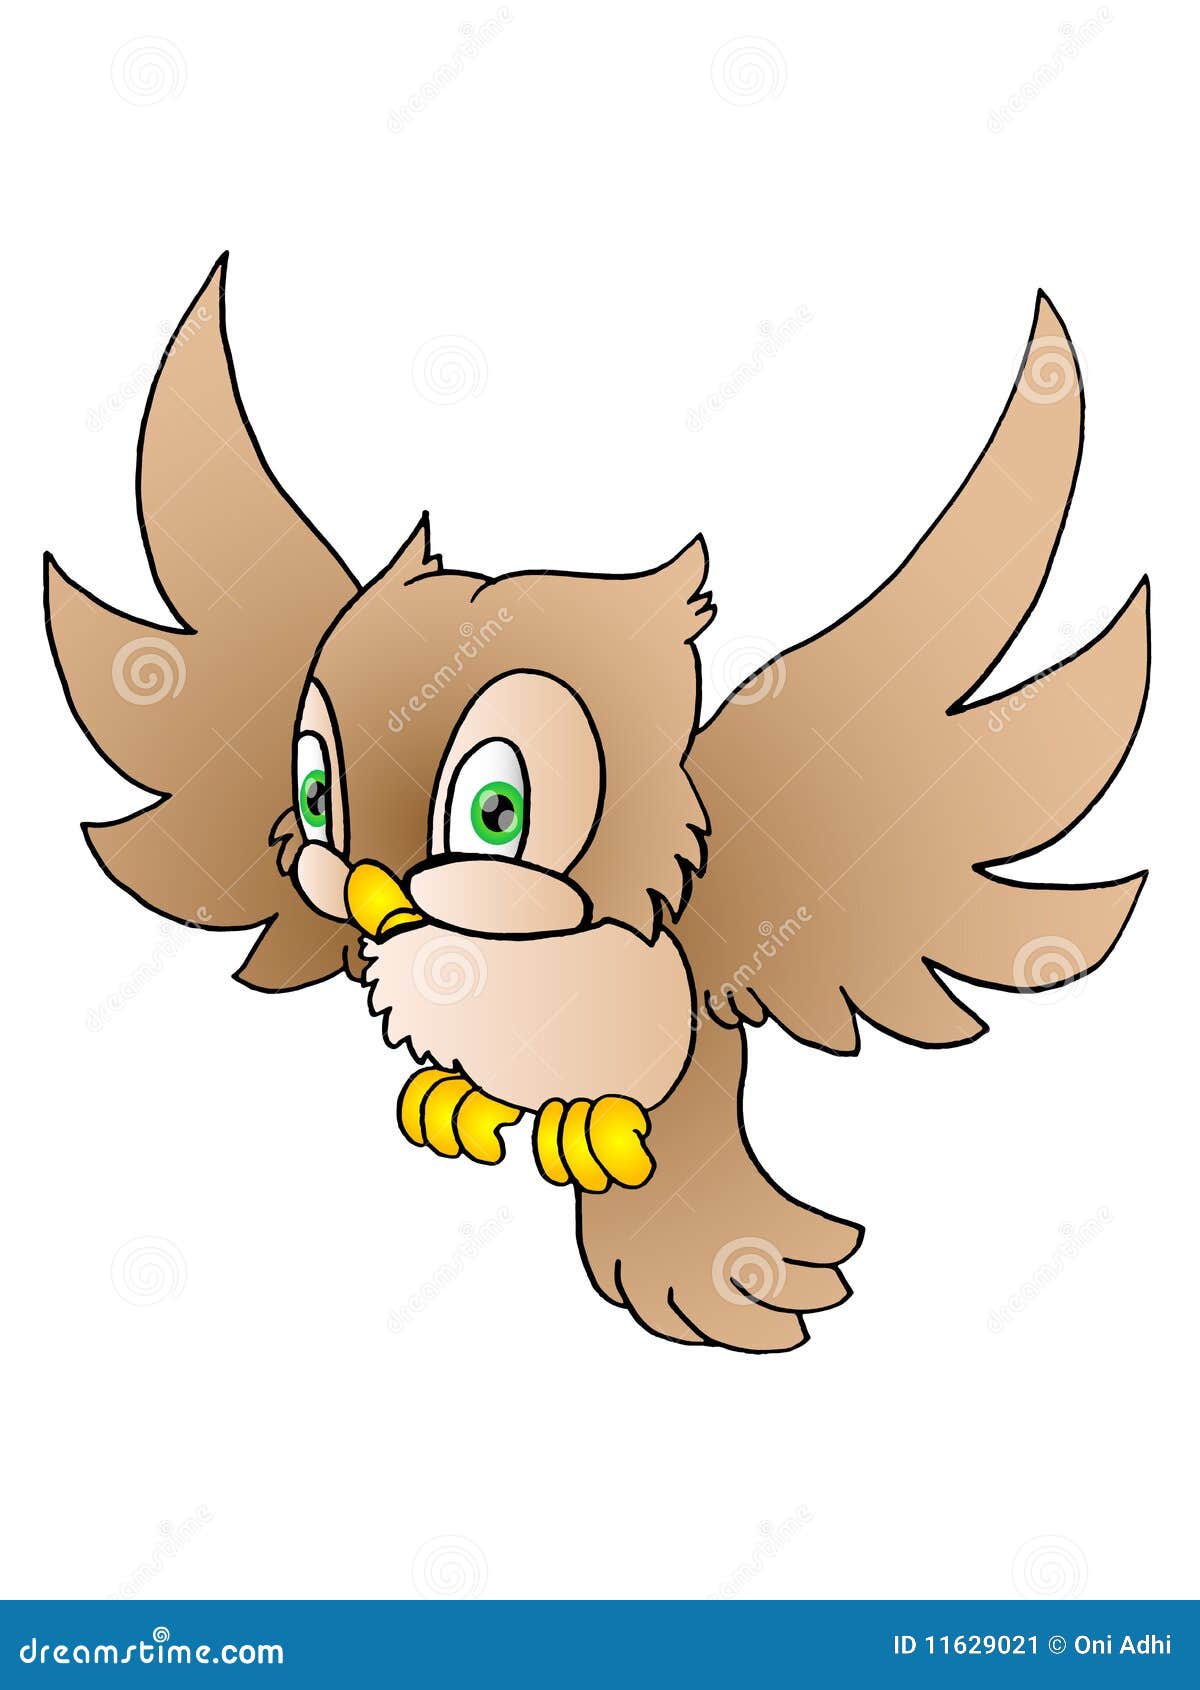 Flying Owl Stock Image - Image: 11629021